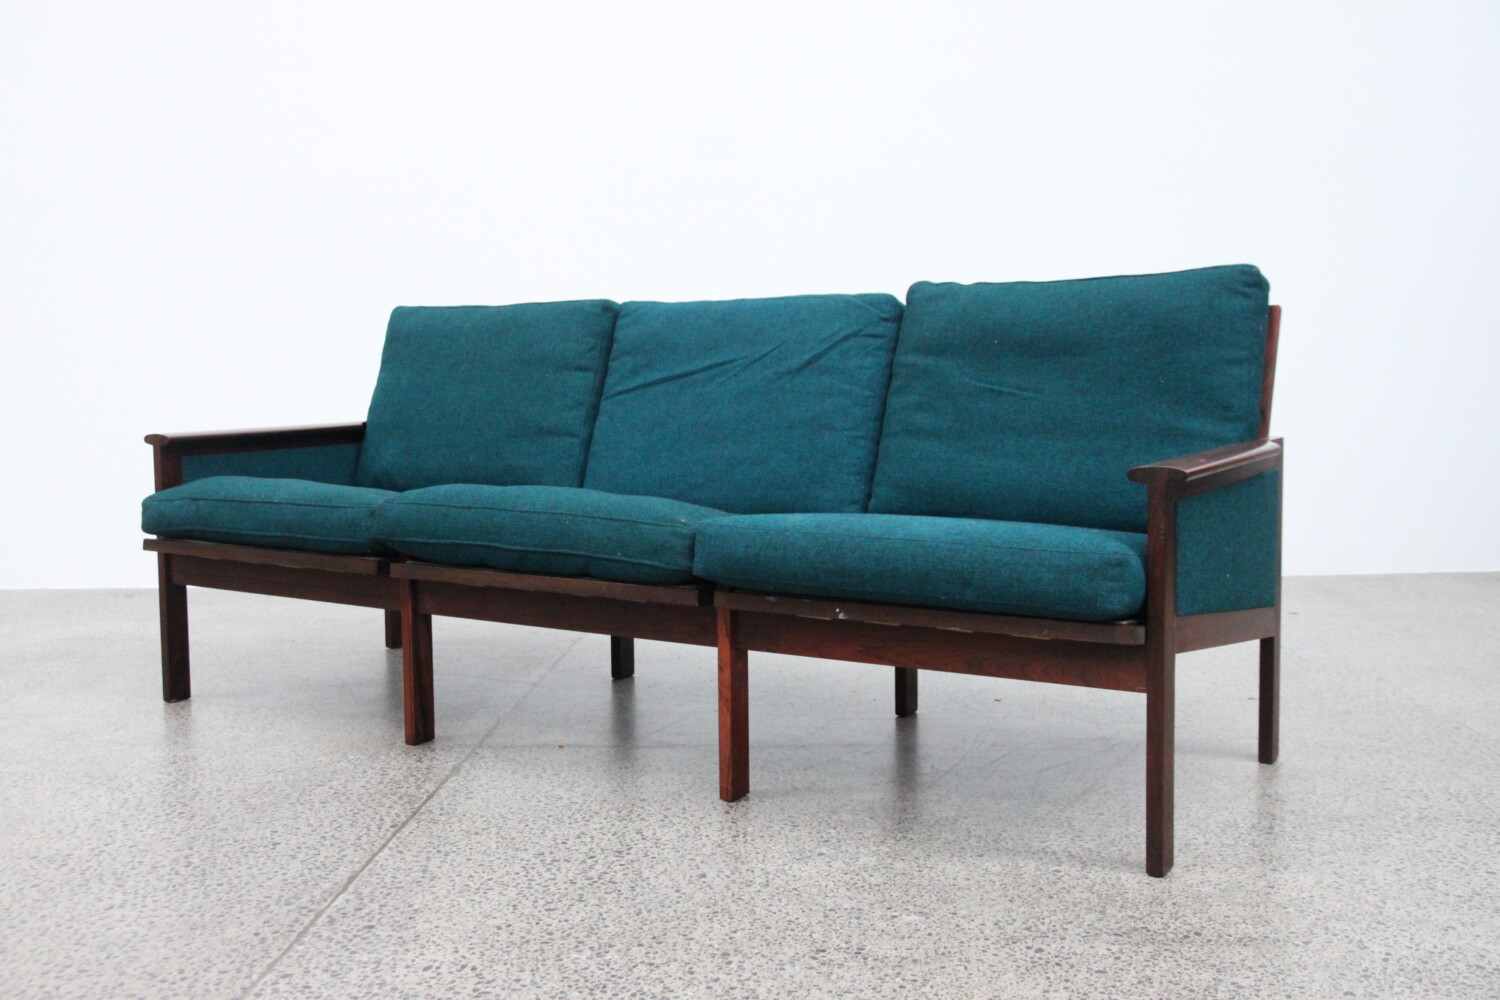 Sofa by Illum Wikkelso